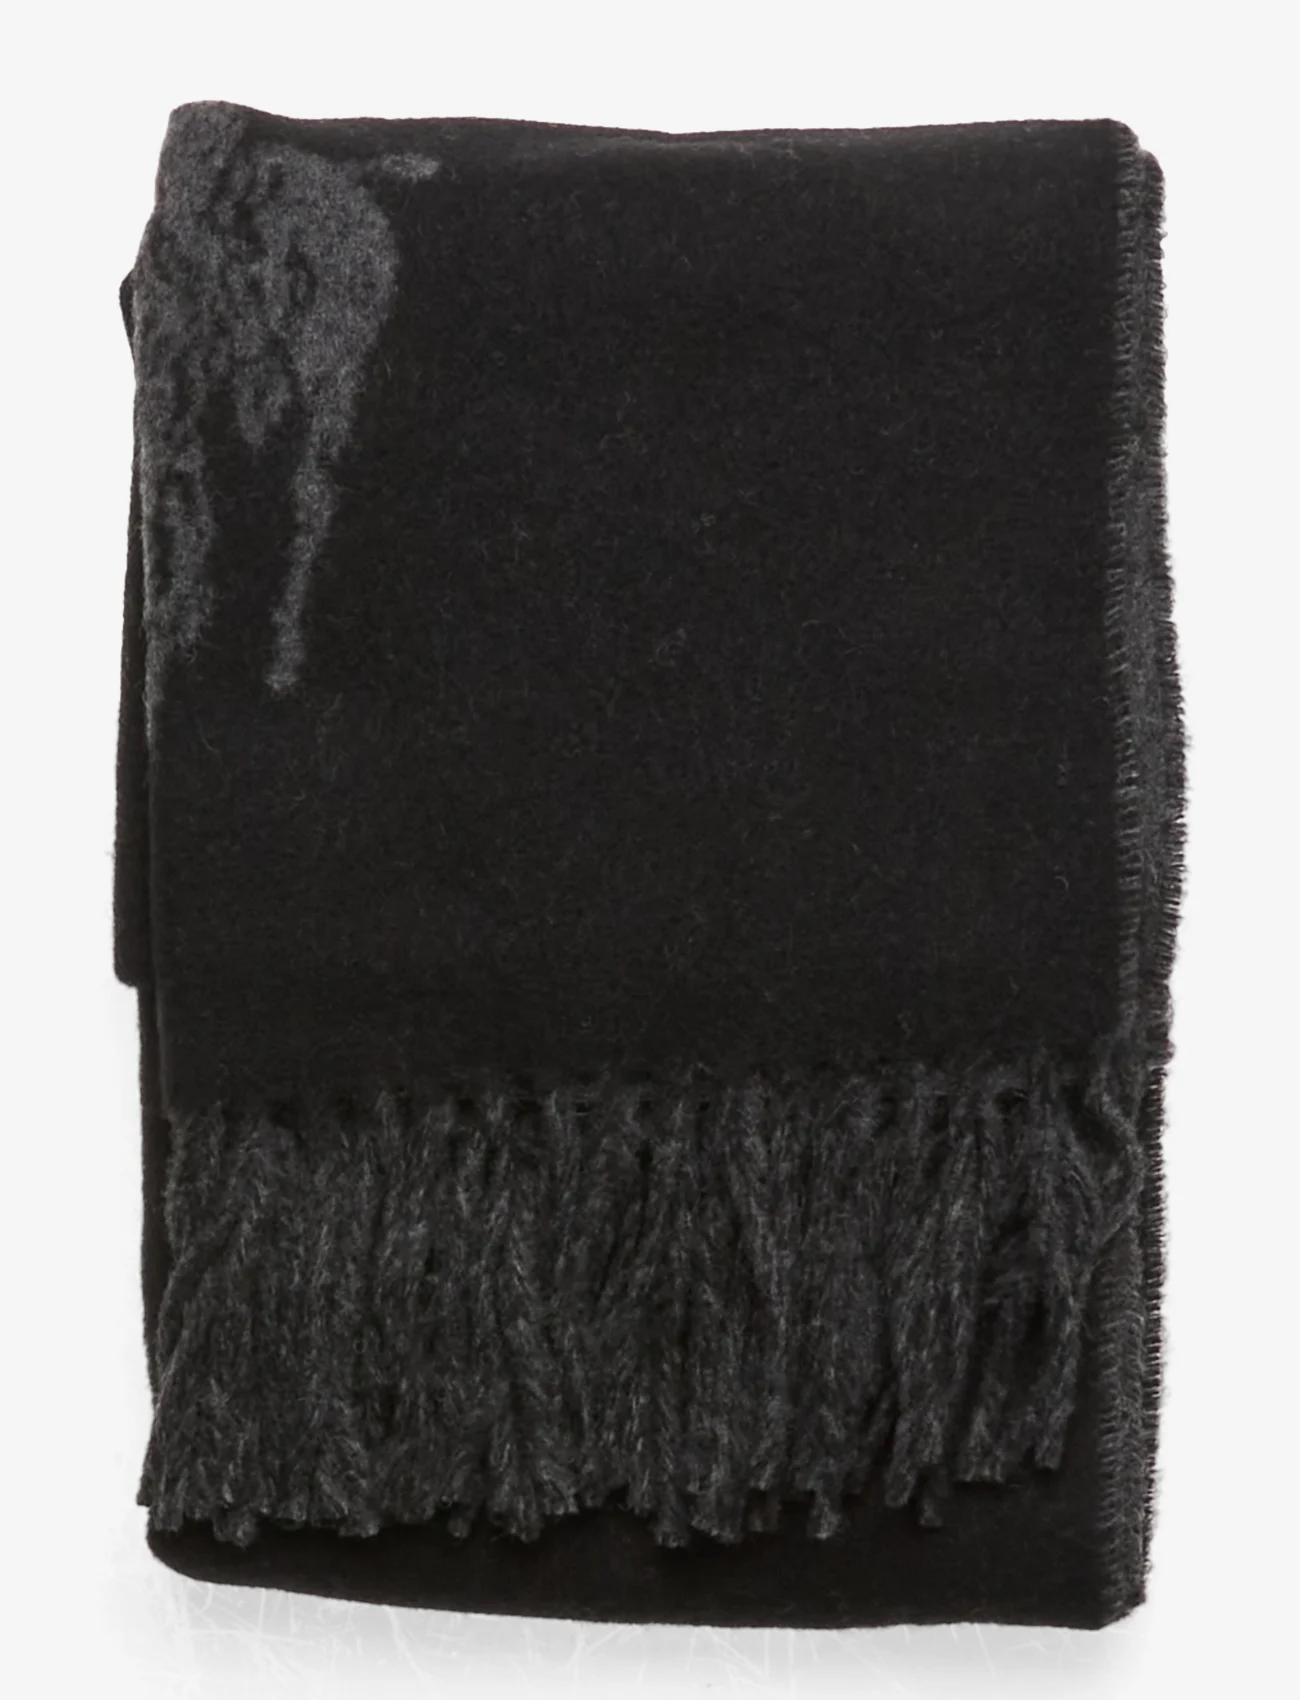 Polo Ralph Lauren - Big Pony Fringe Wool-Blend Scarf - talvesallid - black/charcoal - 1